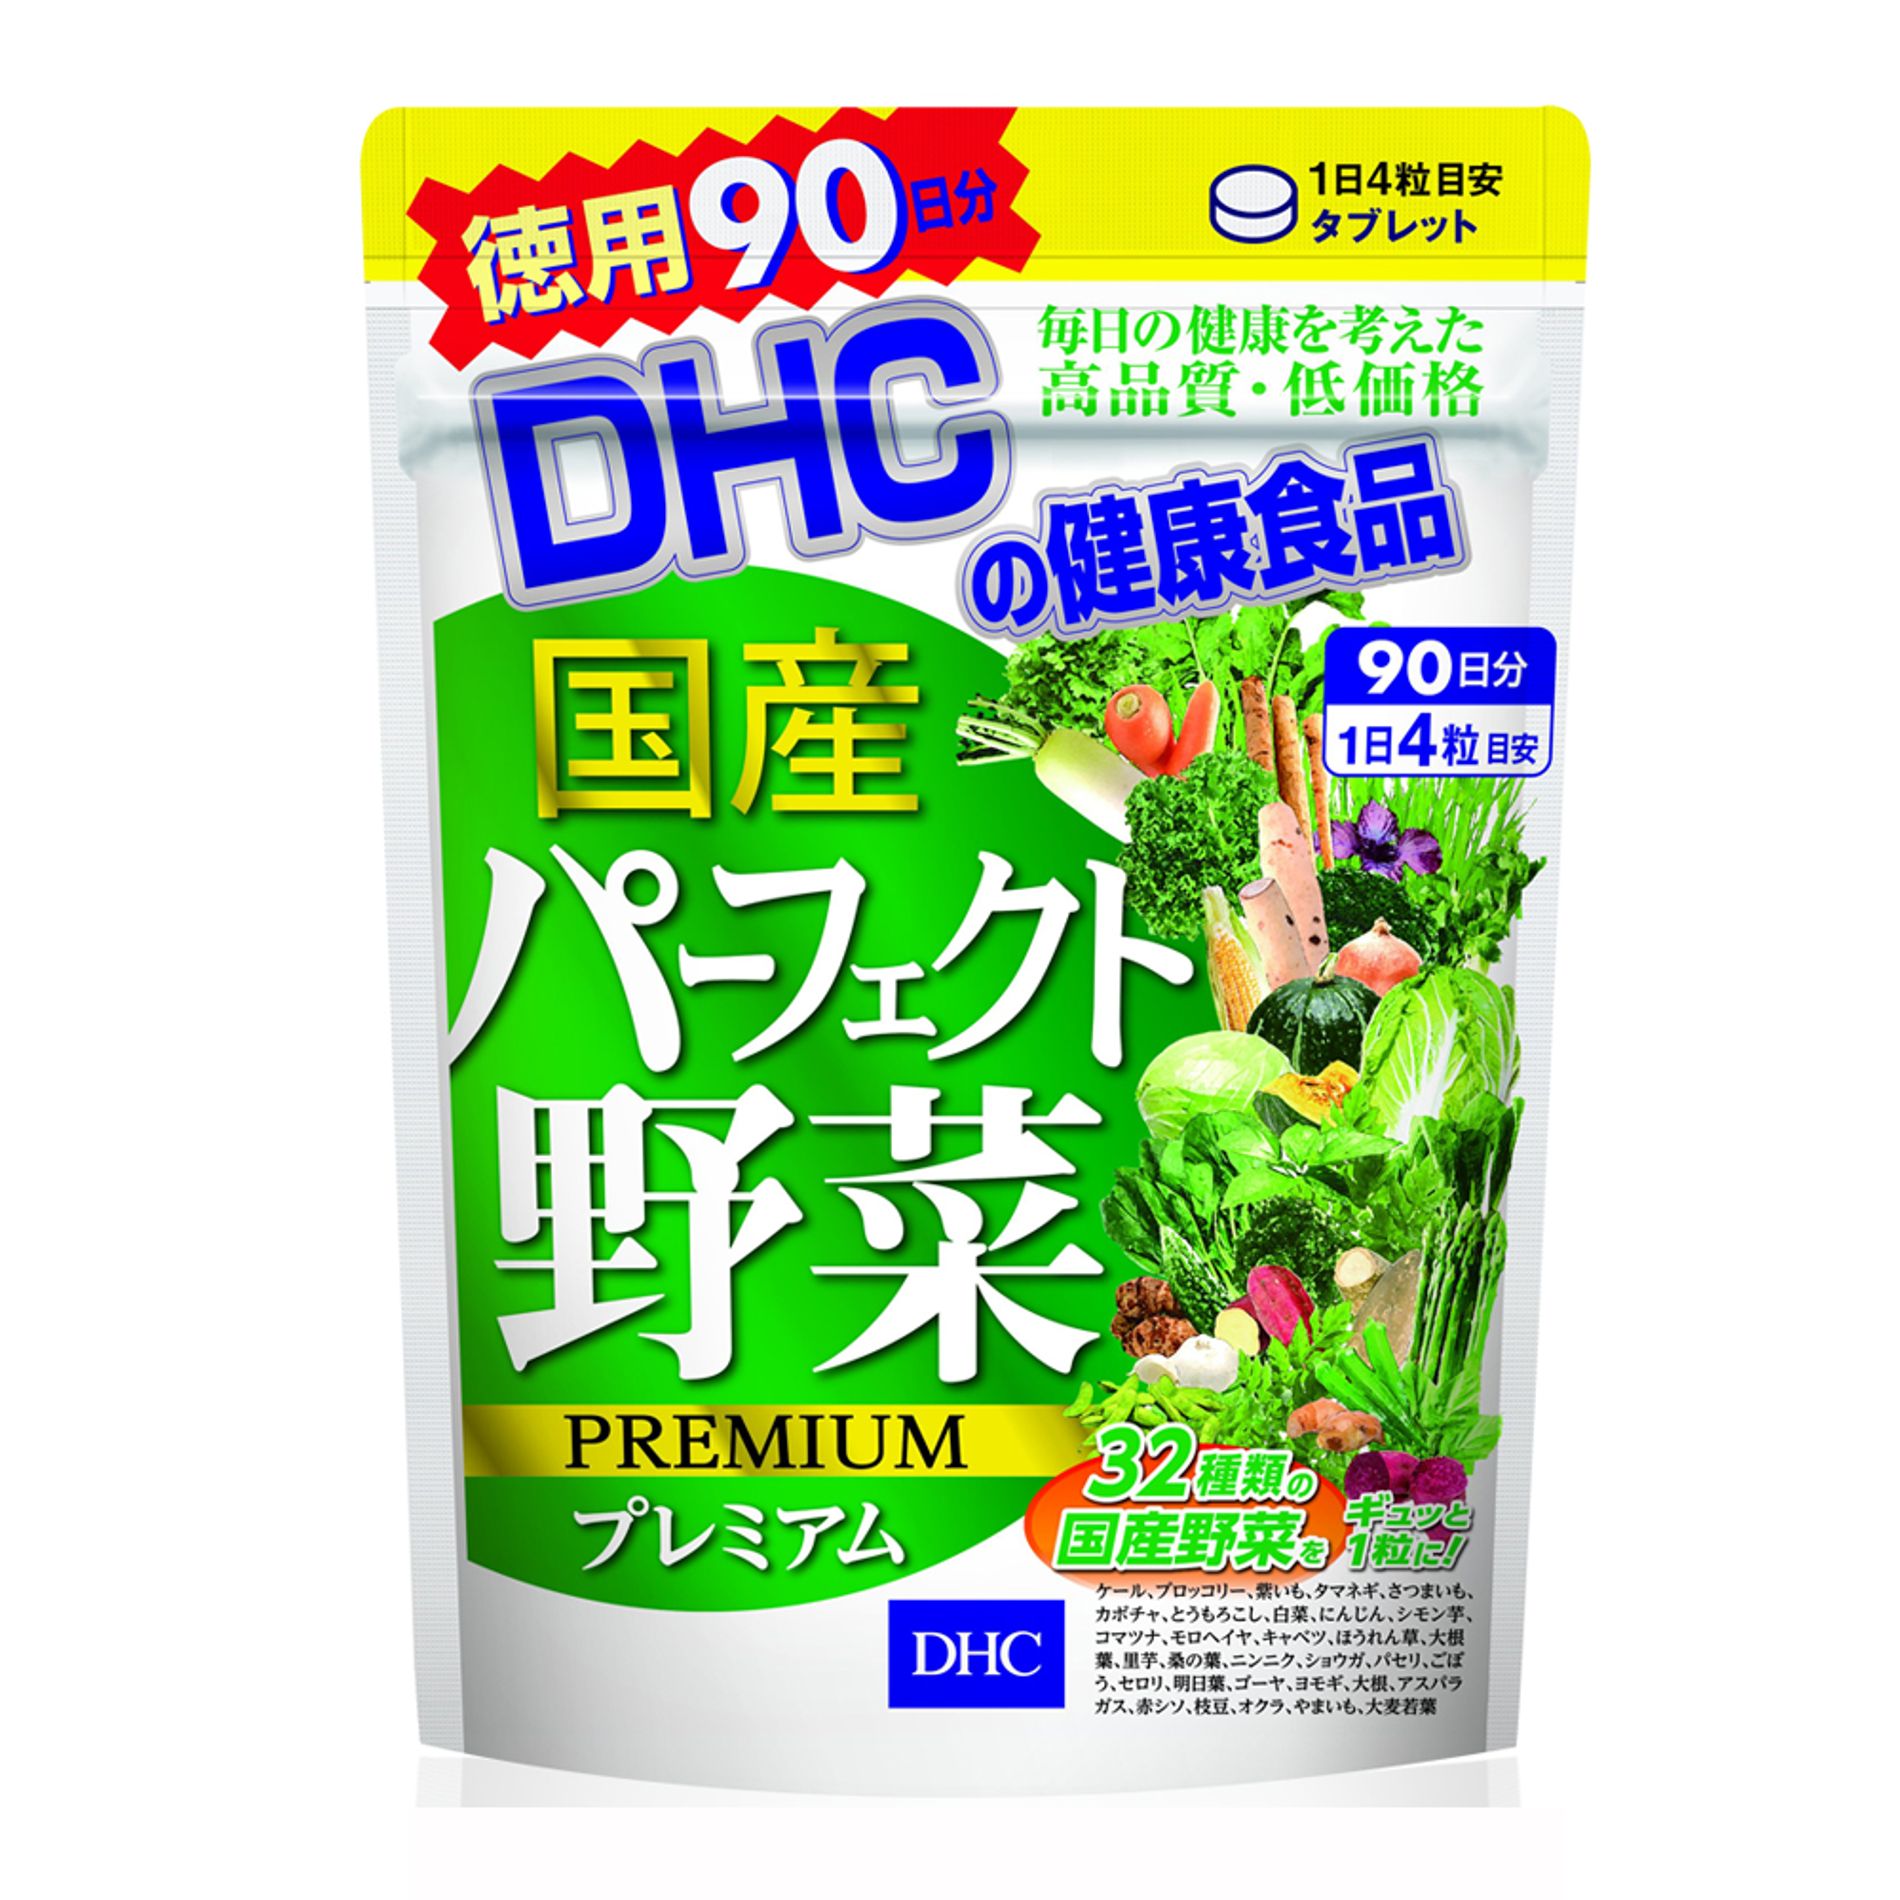 thuc-pham-bao-ve-suc-khoe-dhc-perfect-vegetable-premium-japanese-harvest-5